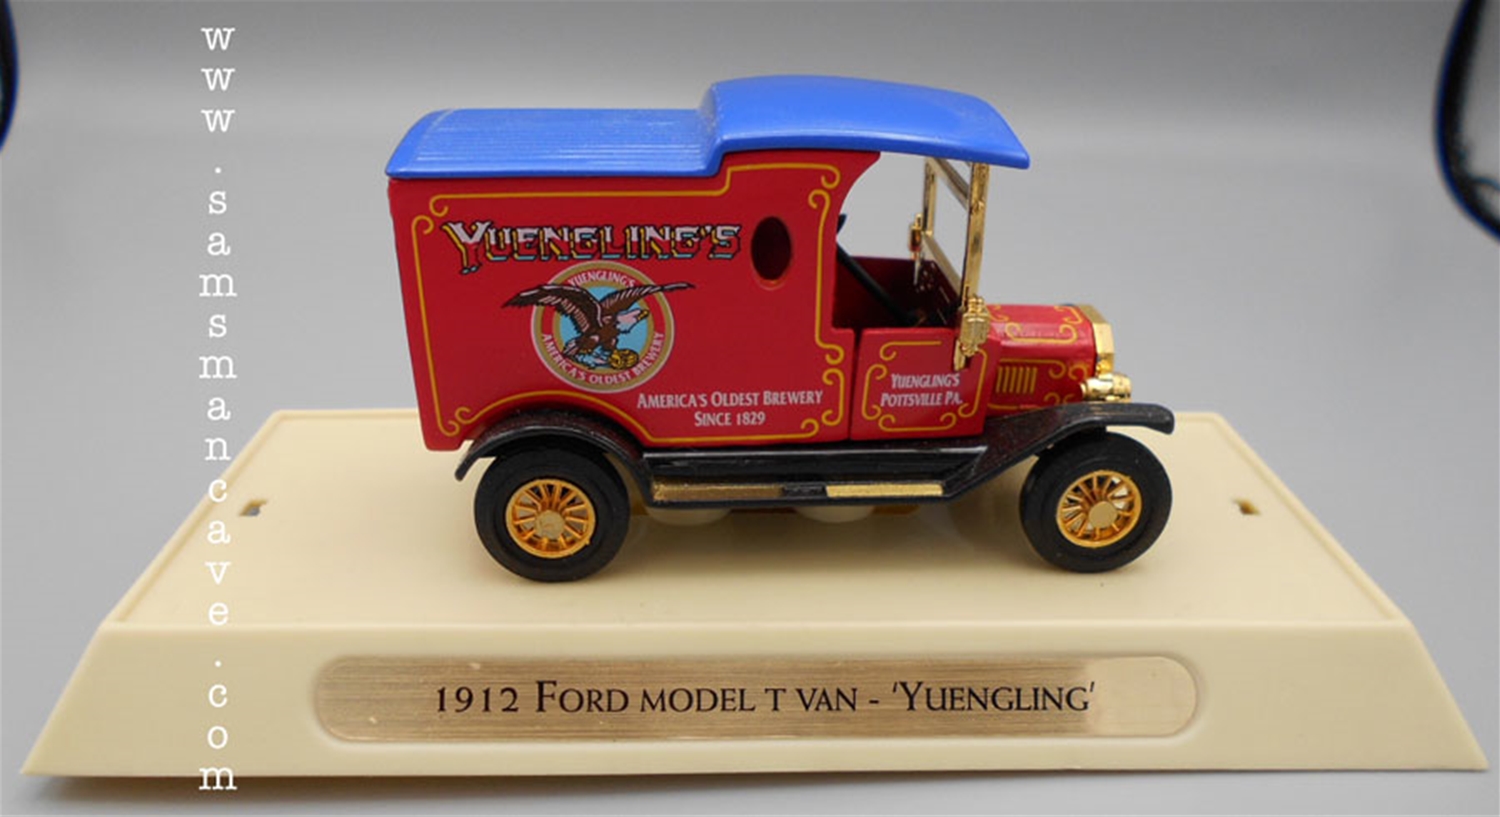 Yuengling 1912 Ford Model T Van